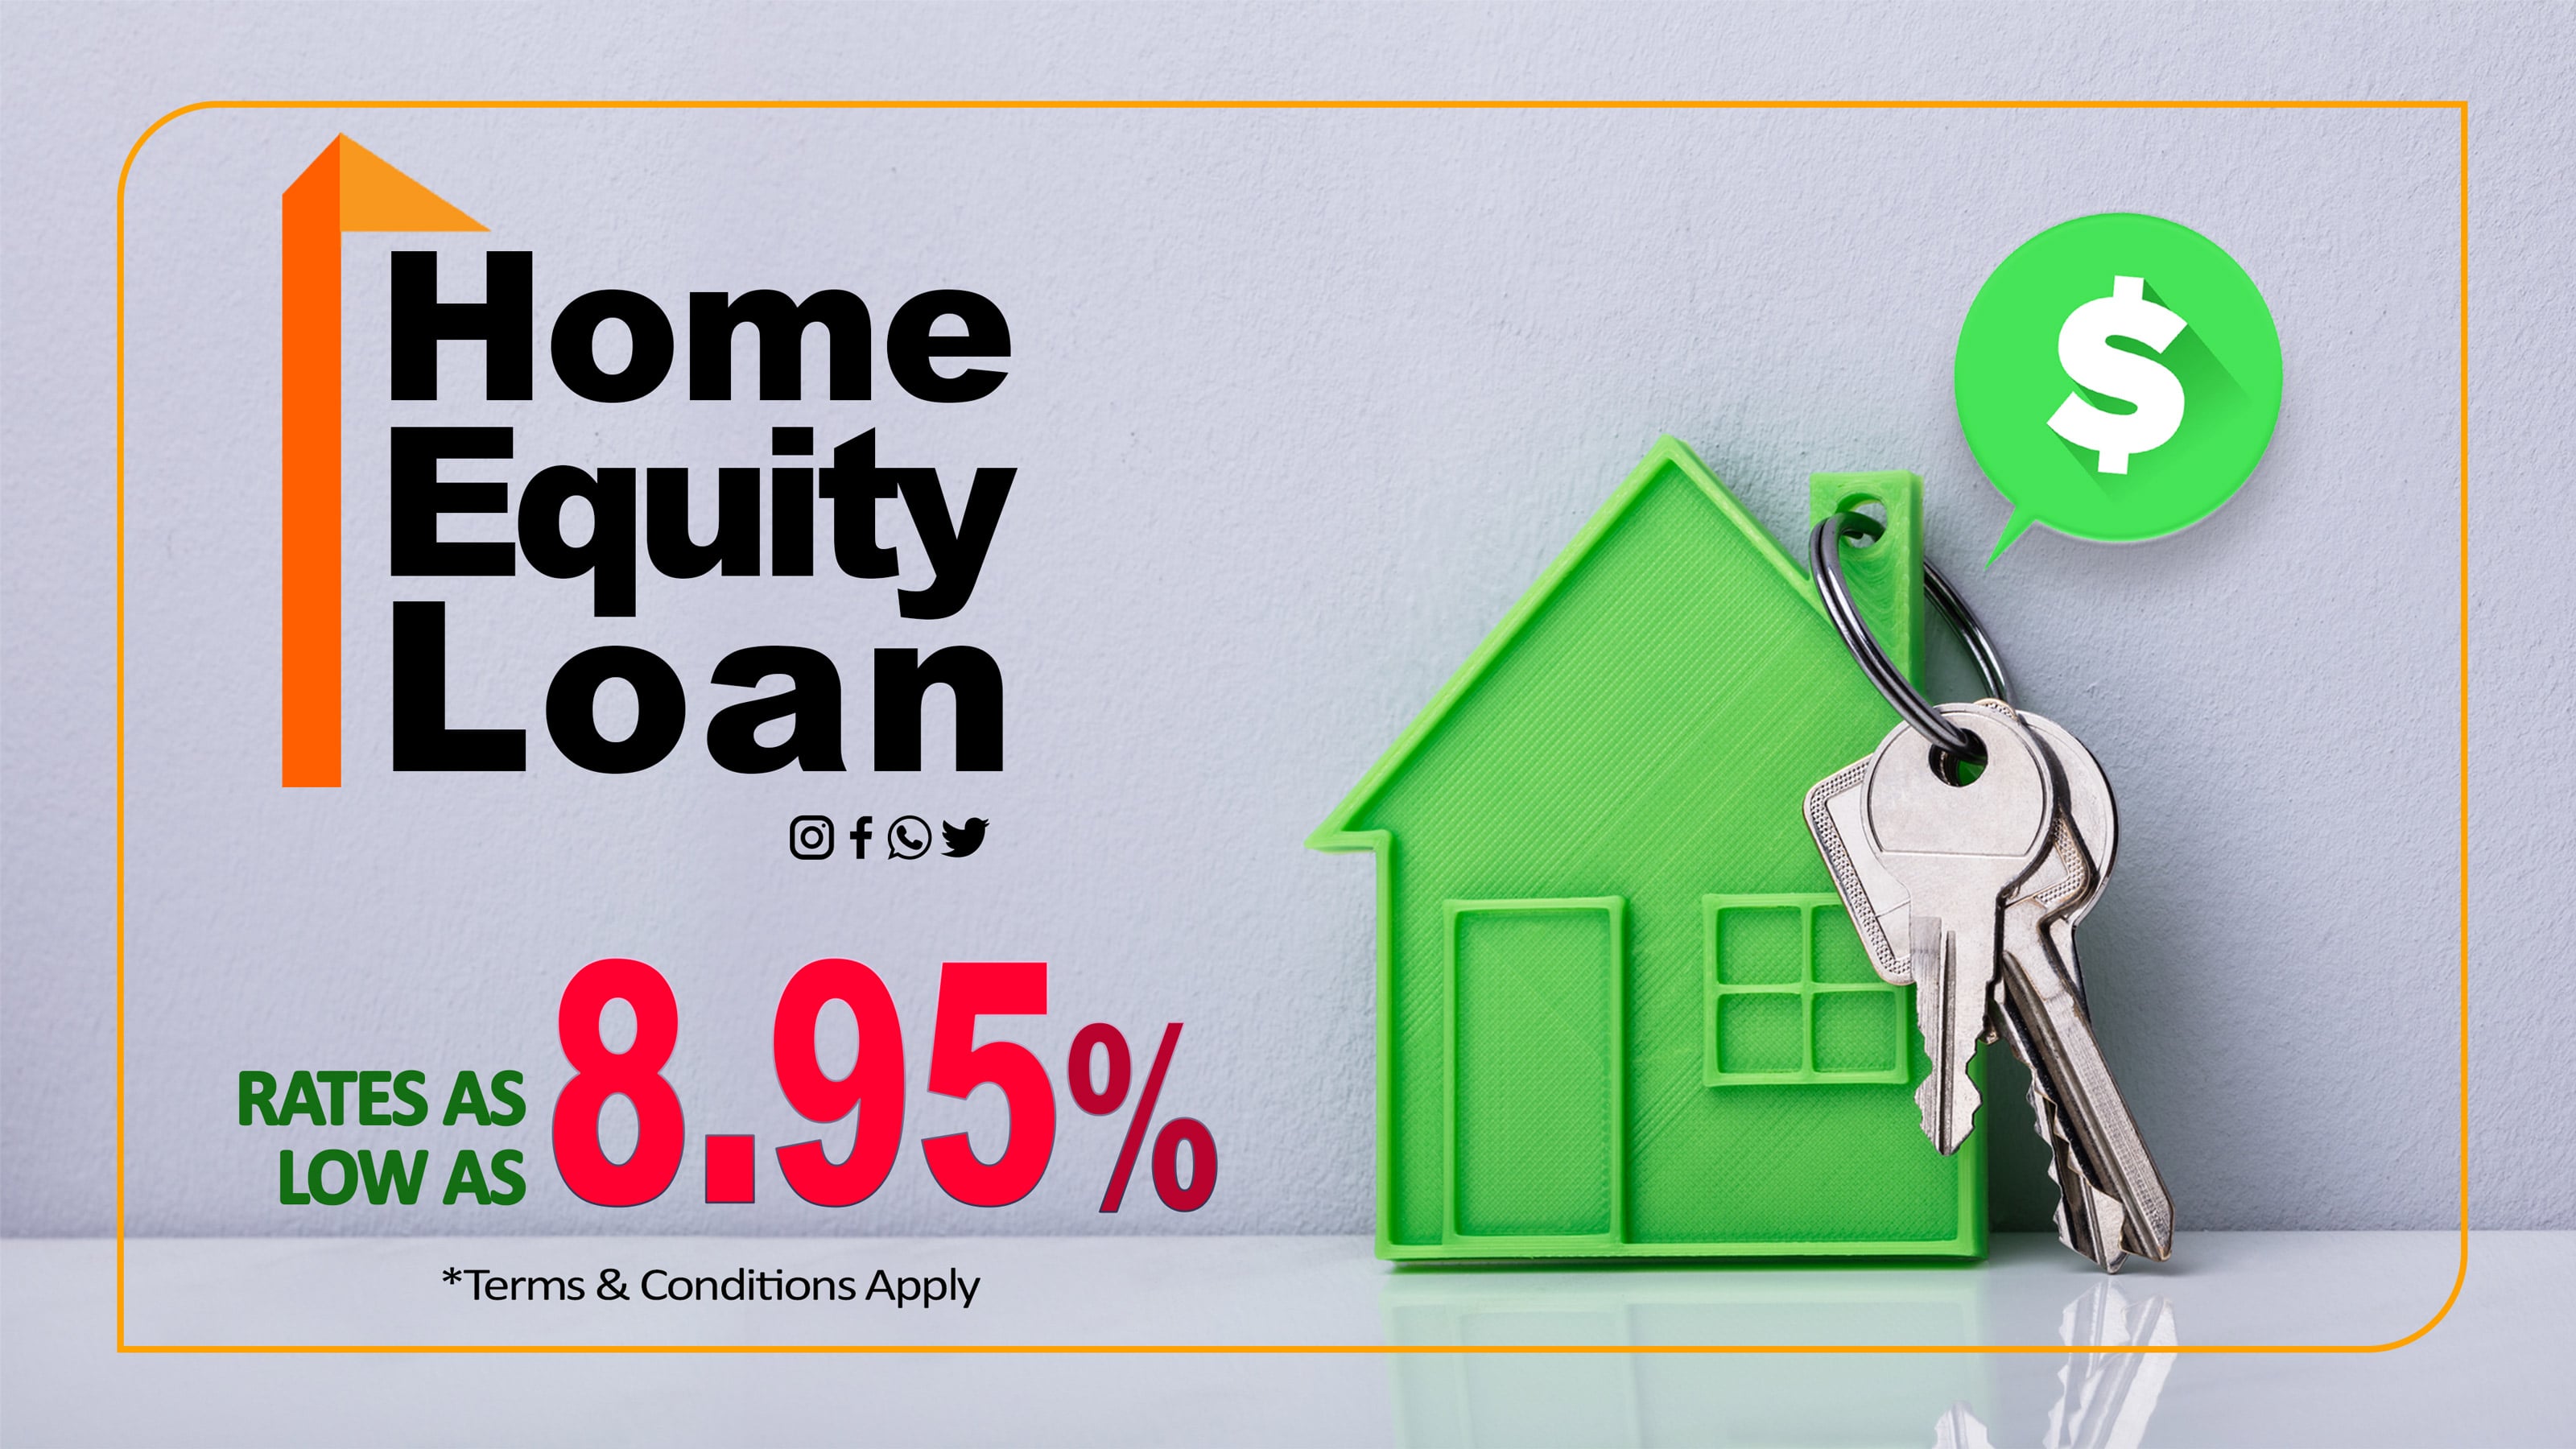 COK Home Equity Loan